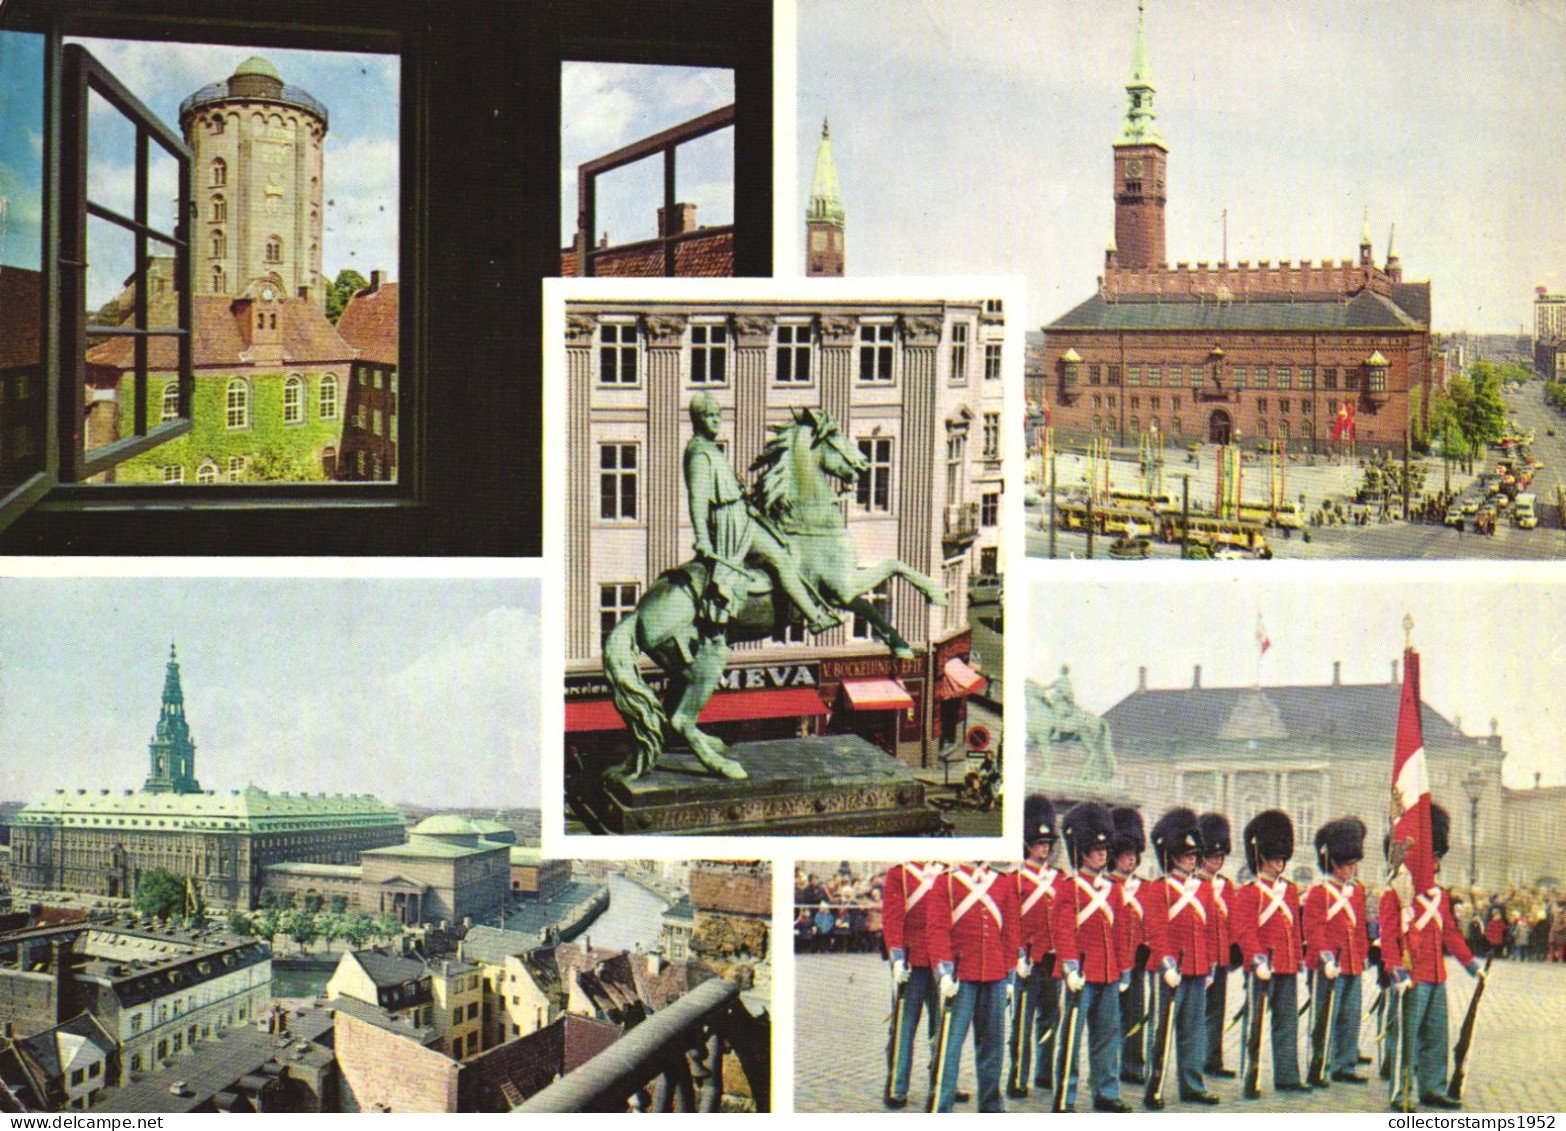 MULTIPLE VIEWS, ARCHITECTURE, TOWN HALL, ROUND TOWER, STATUE, HORSE, CARS, GUARDS, FLAG, CHRISTIANSBORG,DENMARK,POSTCARD - Dänemark